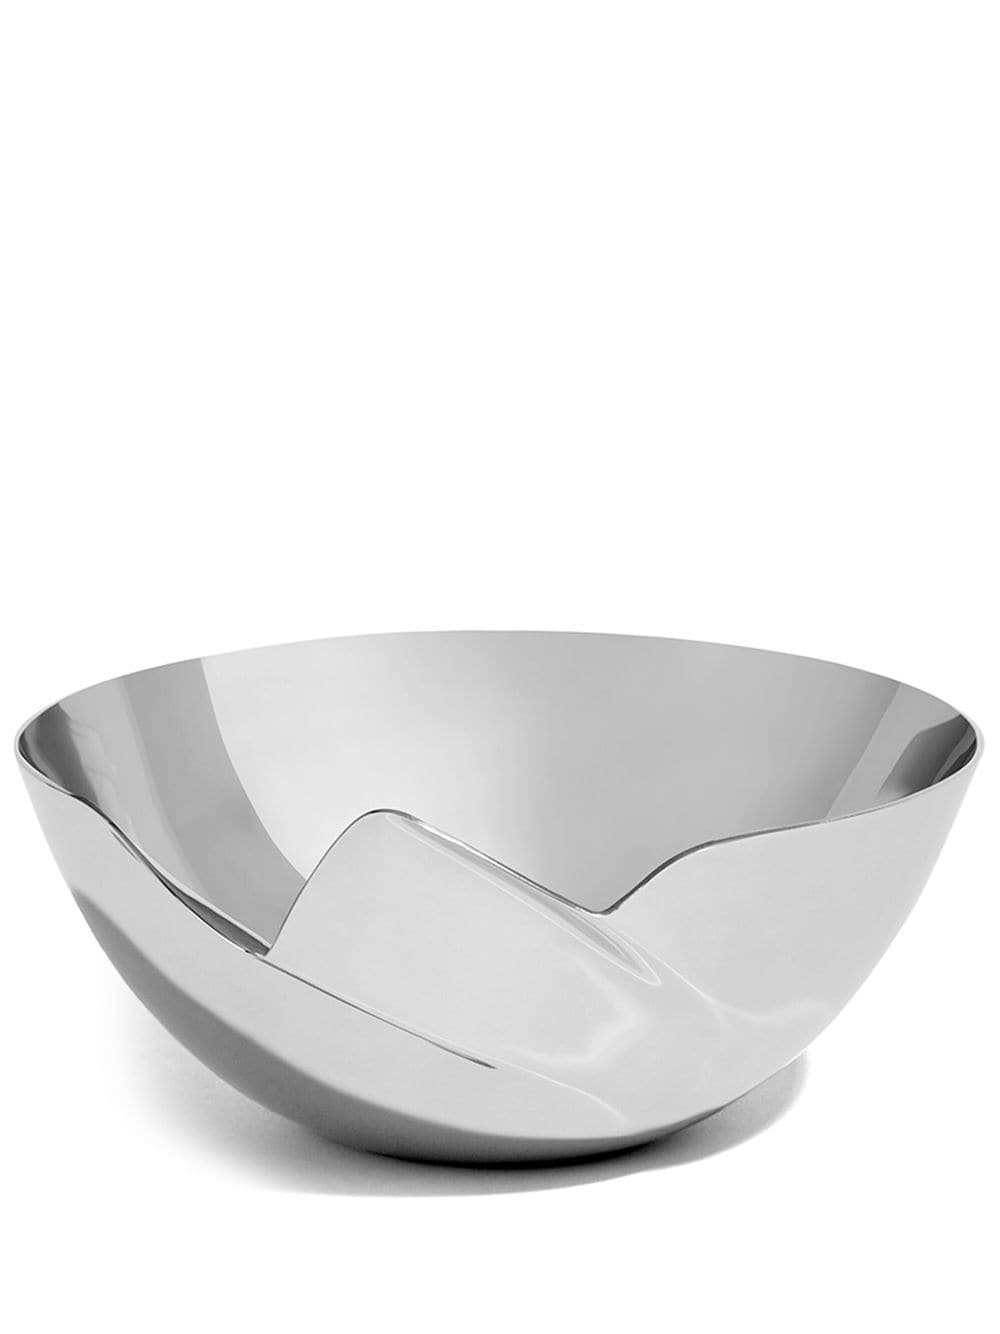 Zaha Hadid Design Serenity stainless steel bowl - Silver von Zaha Hadid Design